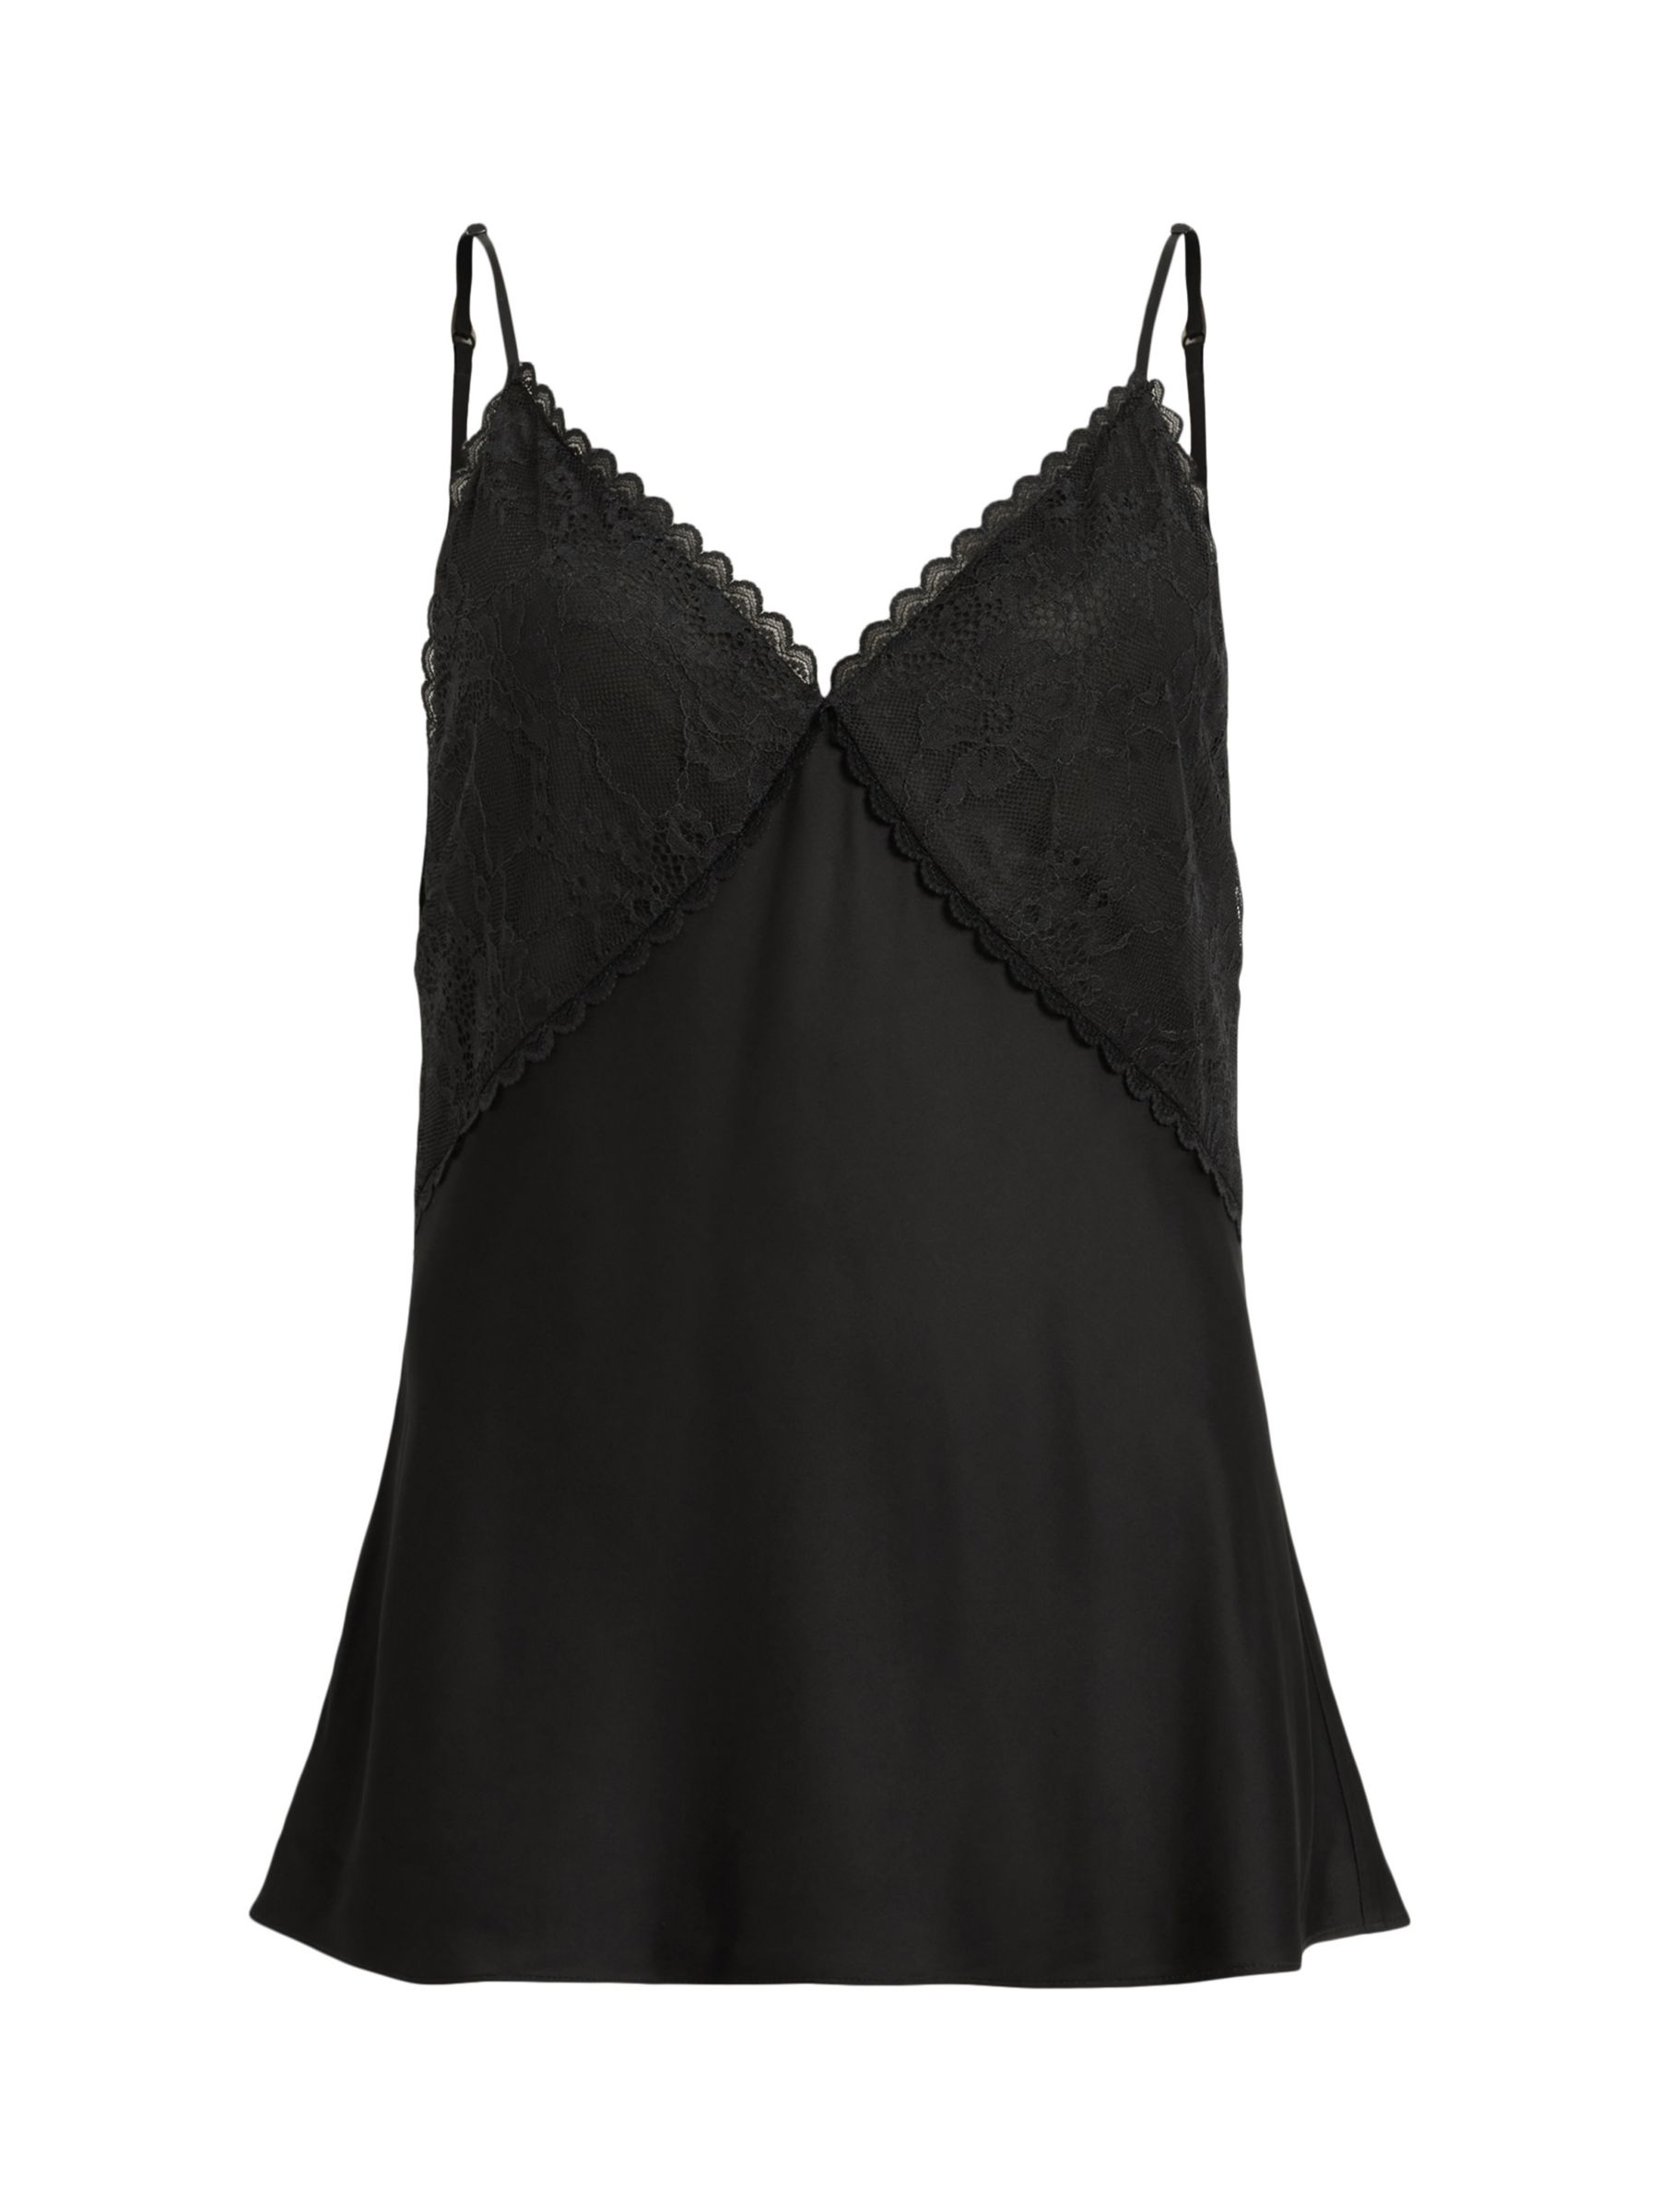 AllSaints Immy Lace Camisole Top, Black at John Lewis & Partners